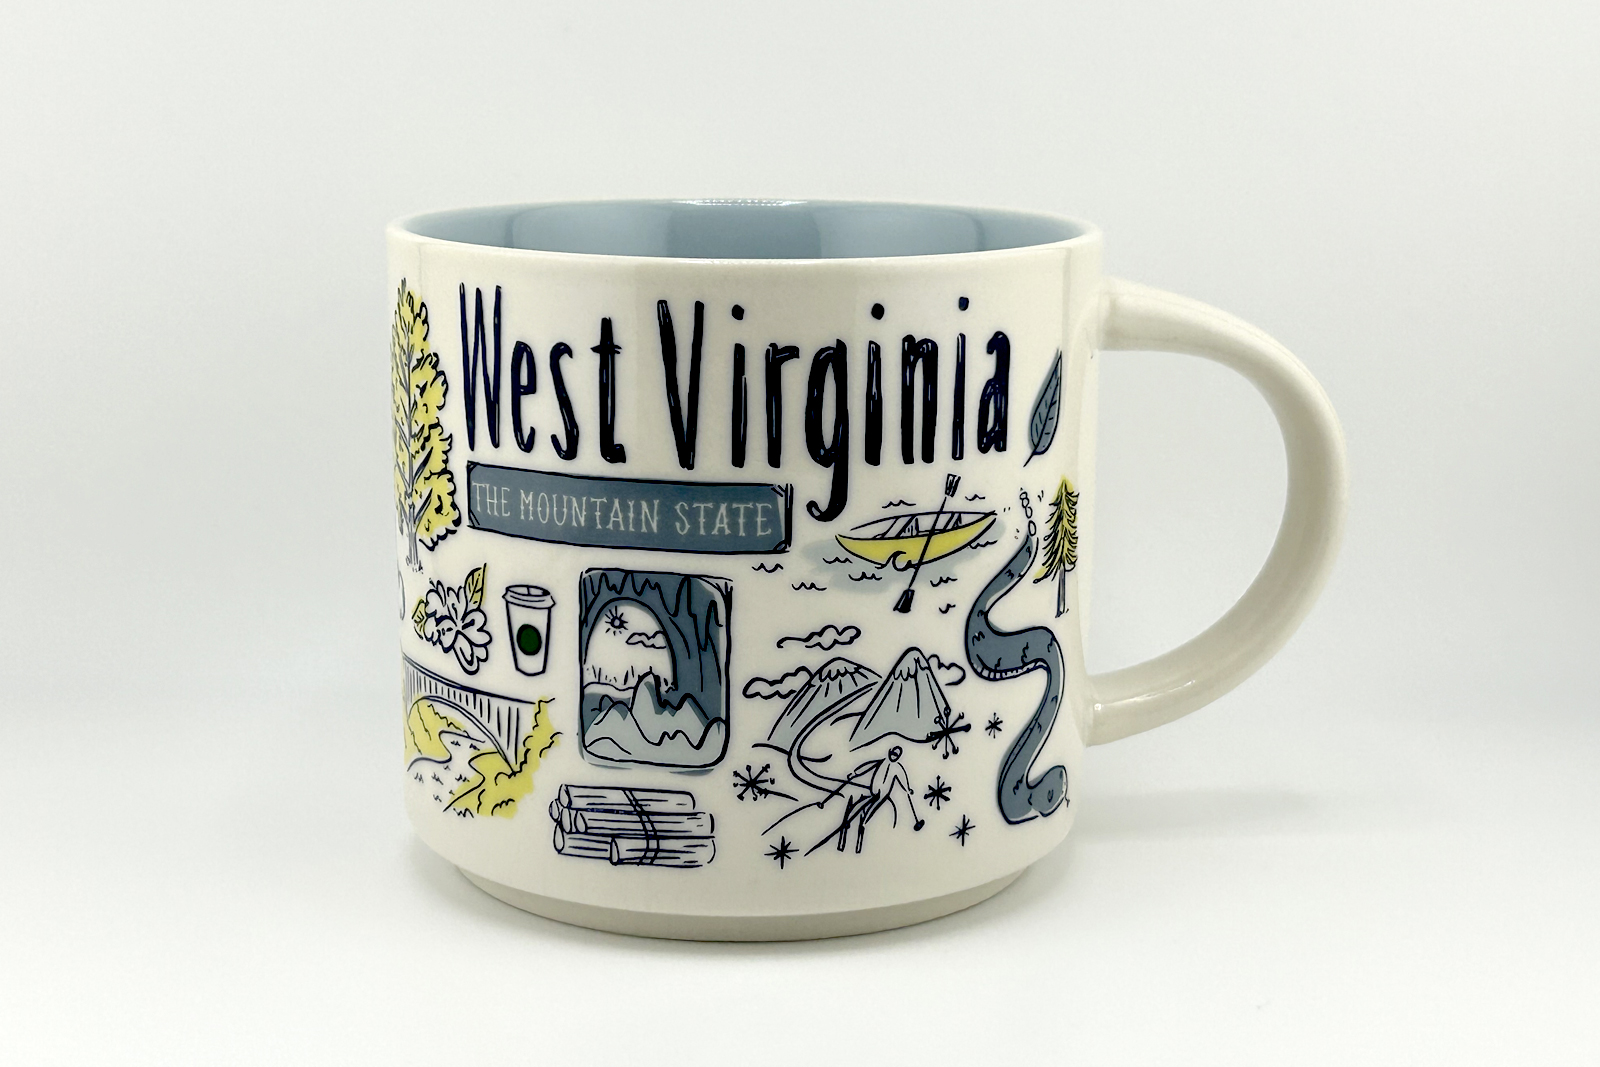 West Virginia Mug: Starbucks Been There Series